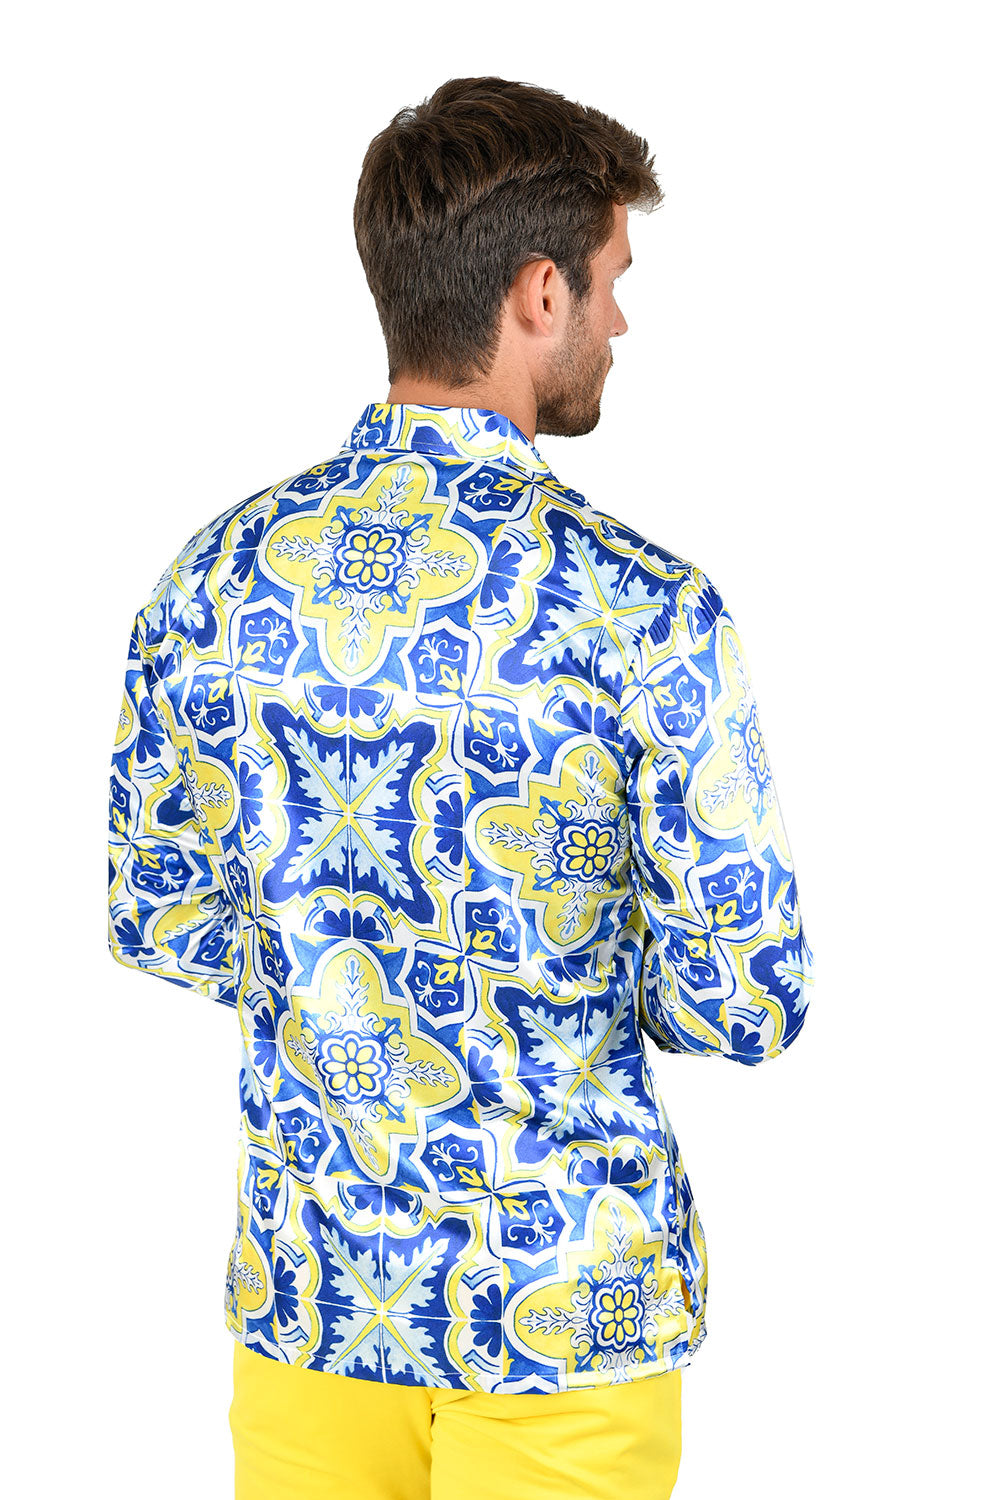 Vassari Men's Printed Floral Long Sleeve Button Down Shirts VS21